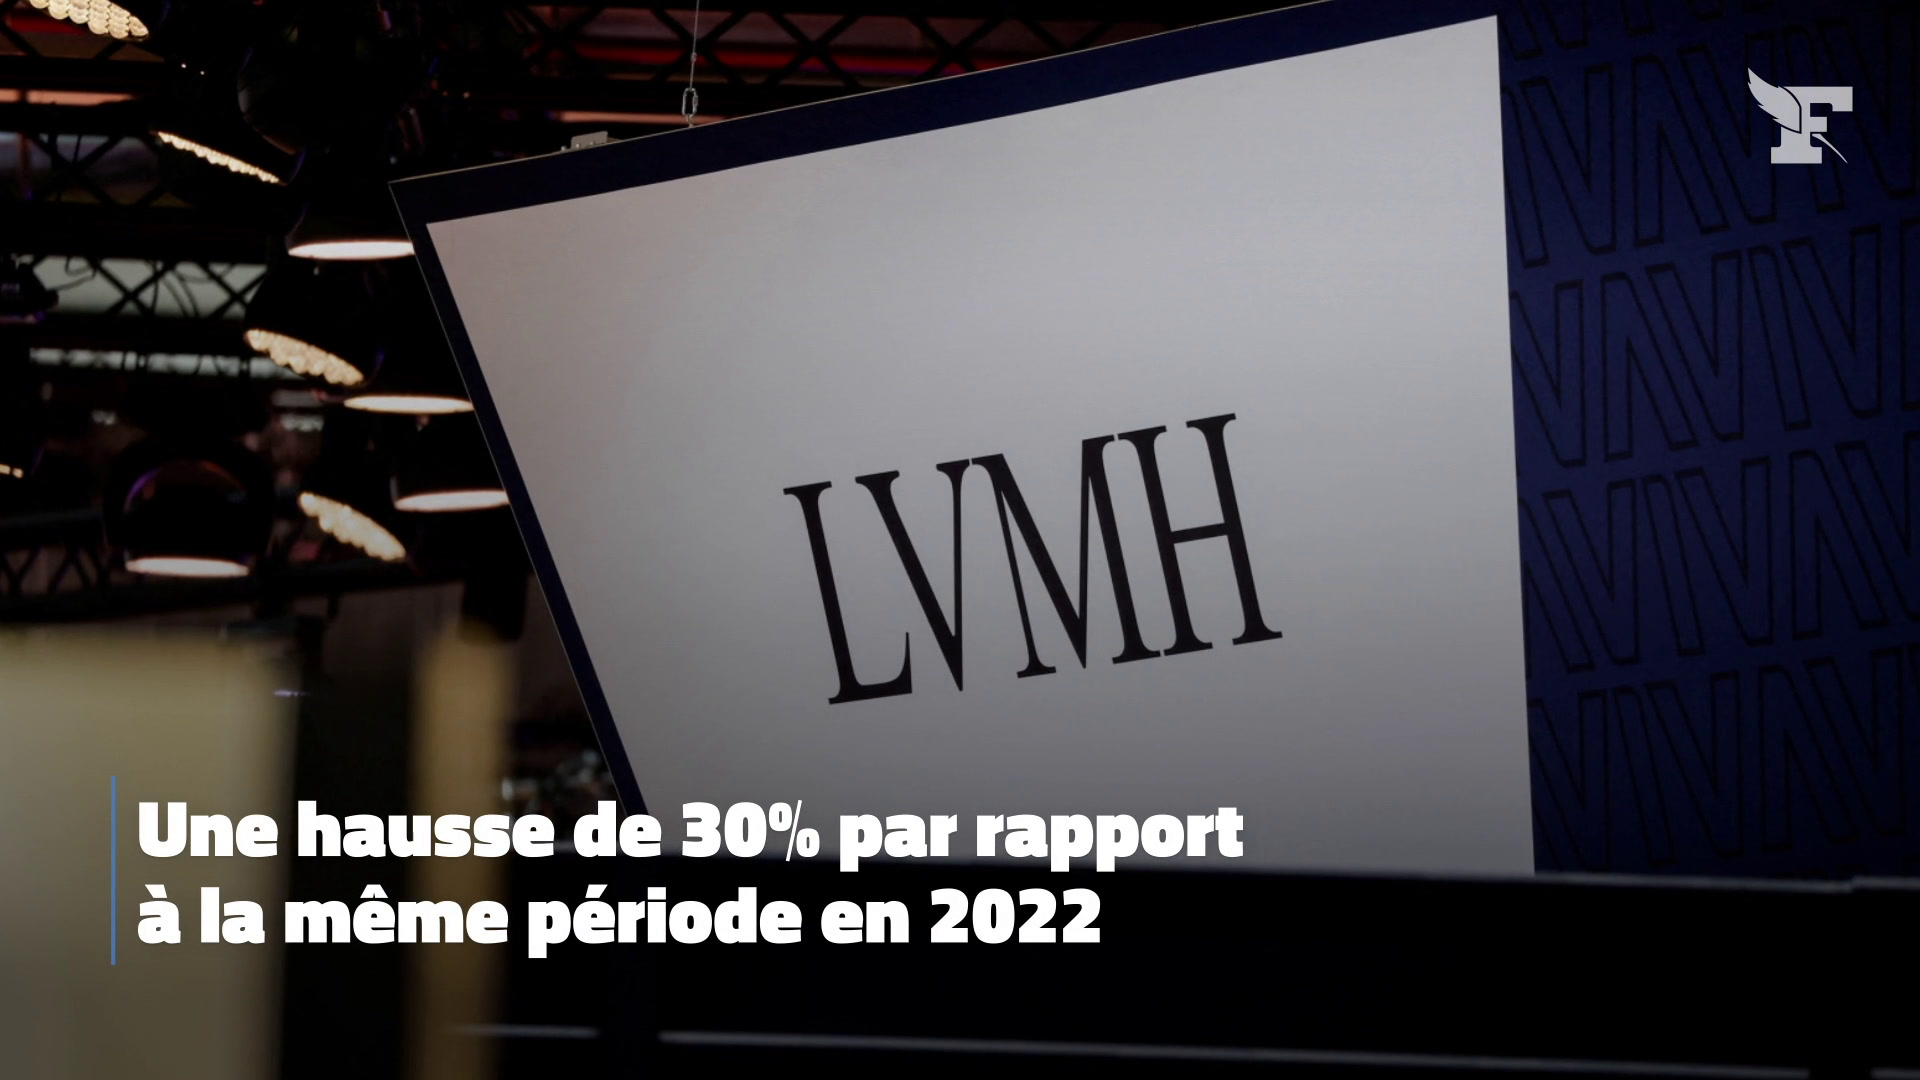 Thélios acquires iconic french Eyewear brand Vuarnet - LVMH